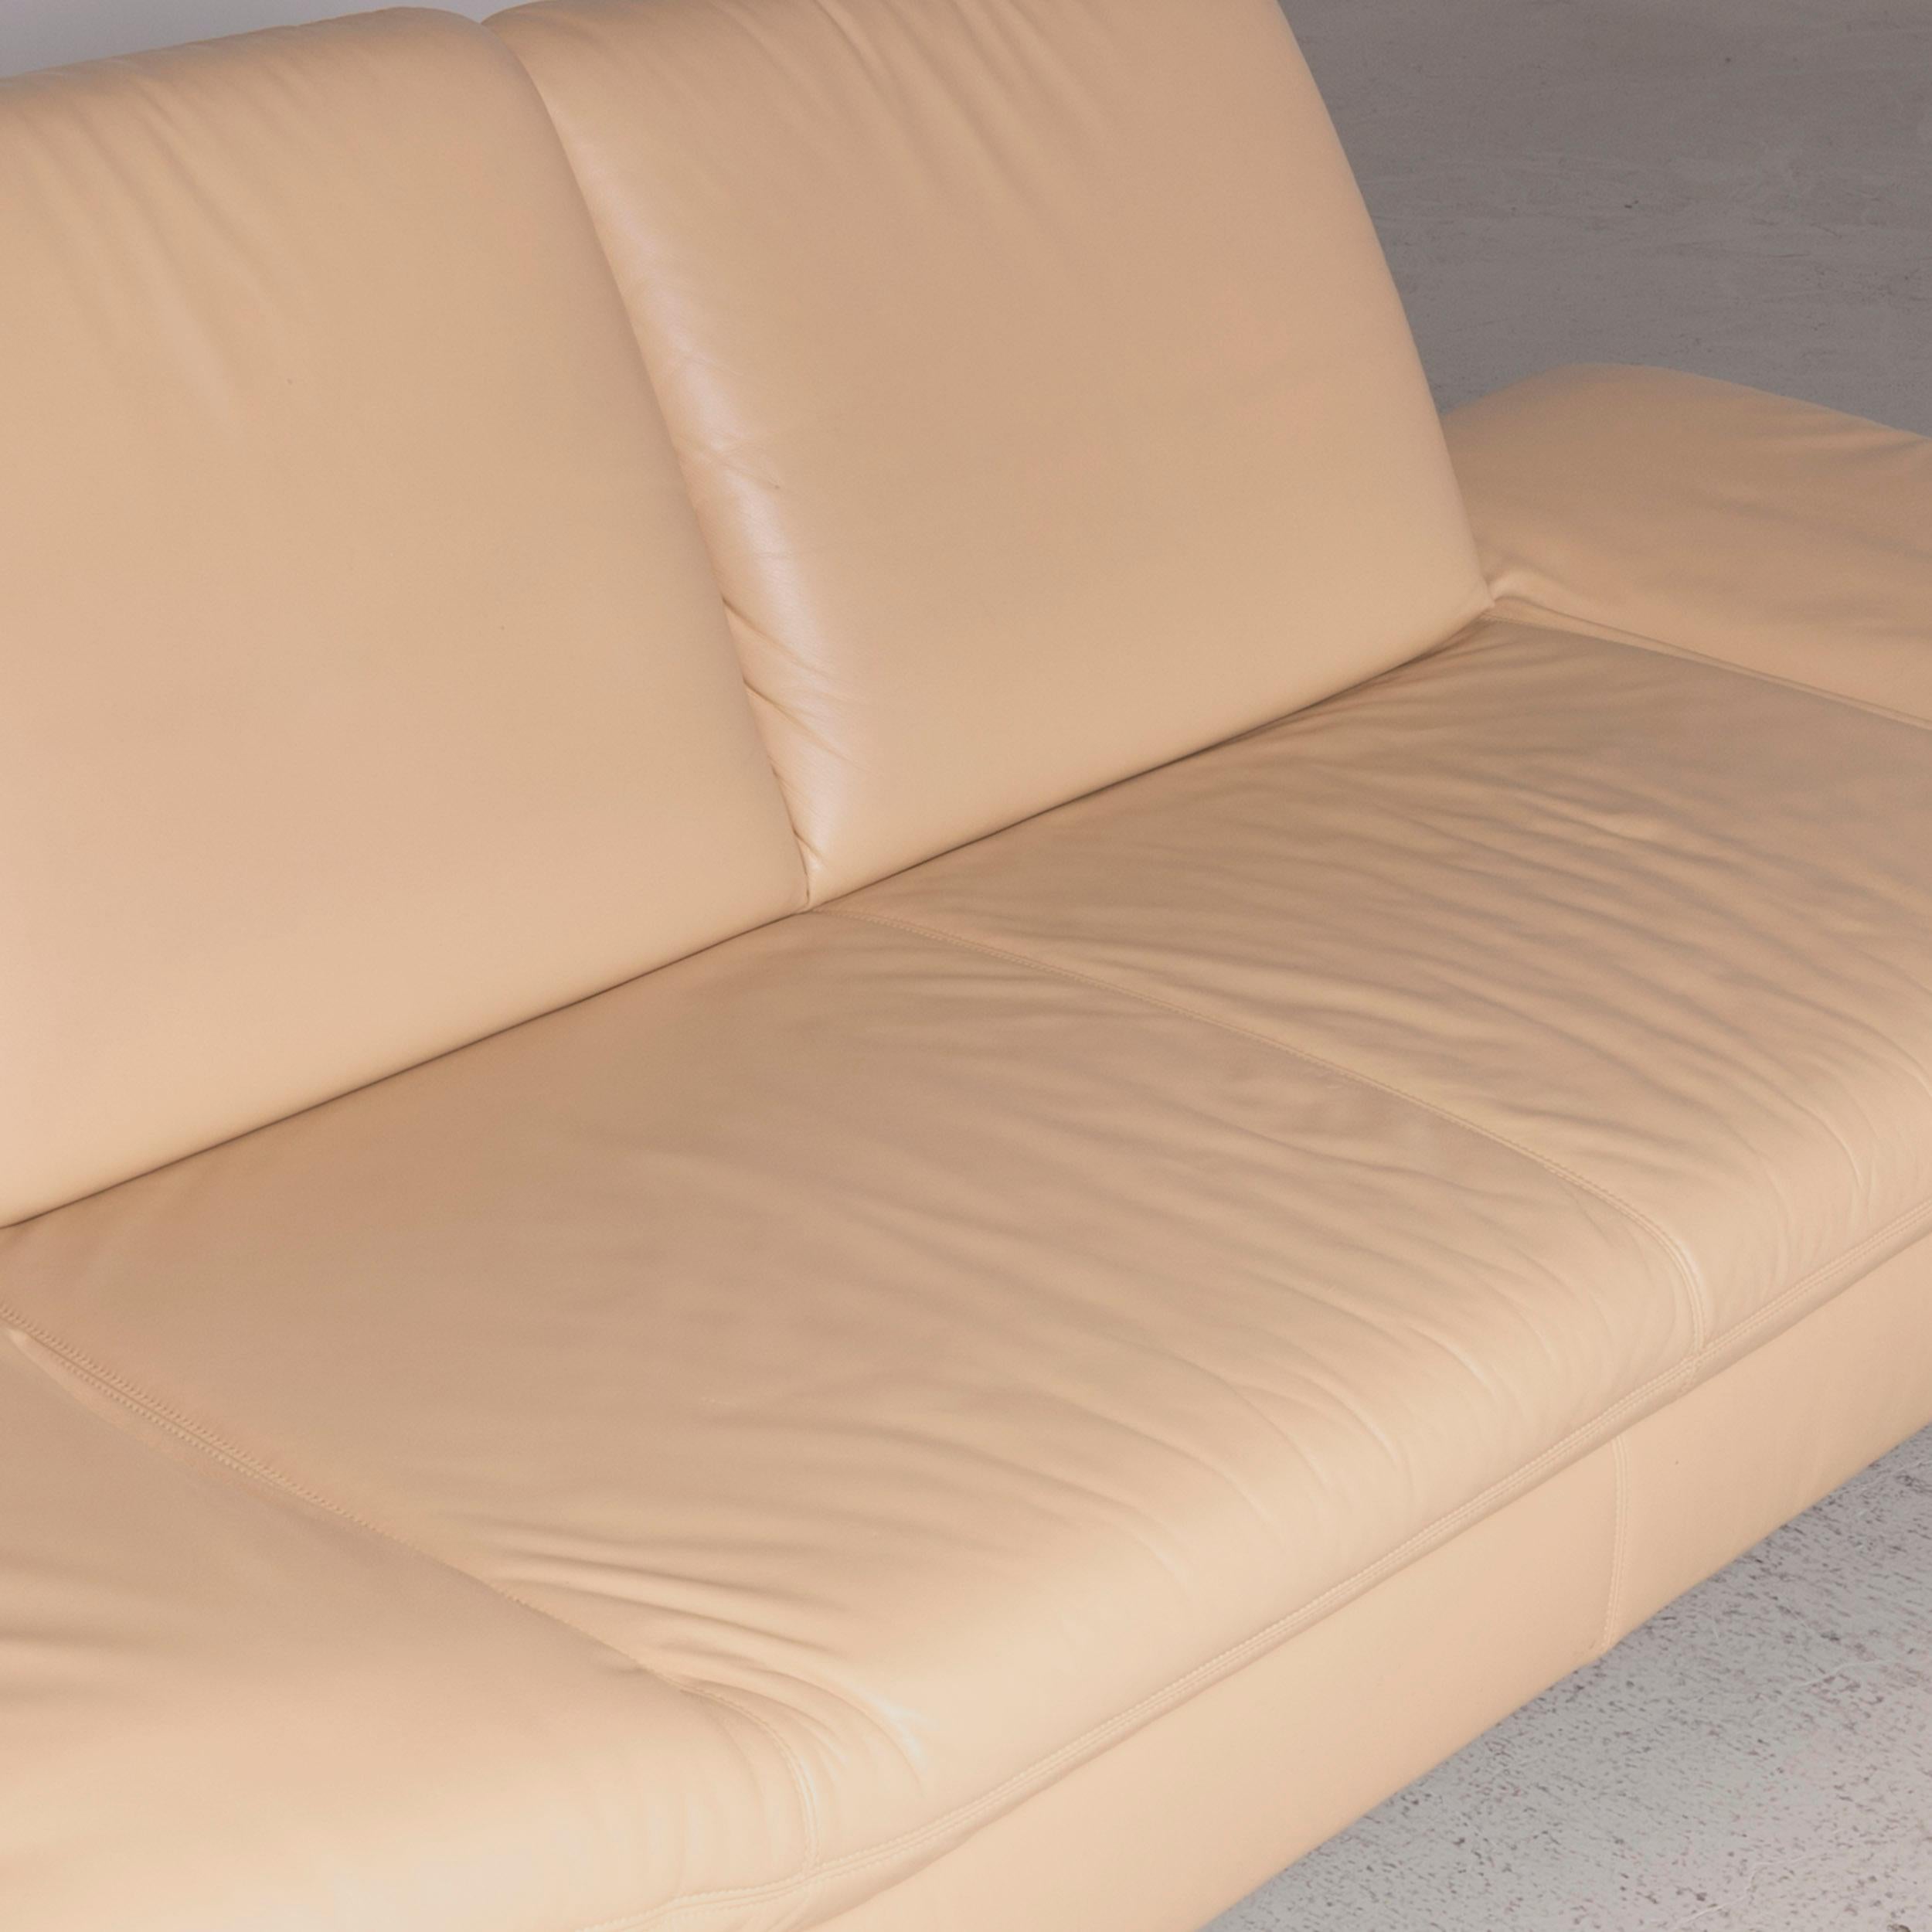 Contemporary Koinor Rivoli Designer Leather Sofa Beige Genuine Leather Three-Seat Couch For Sale